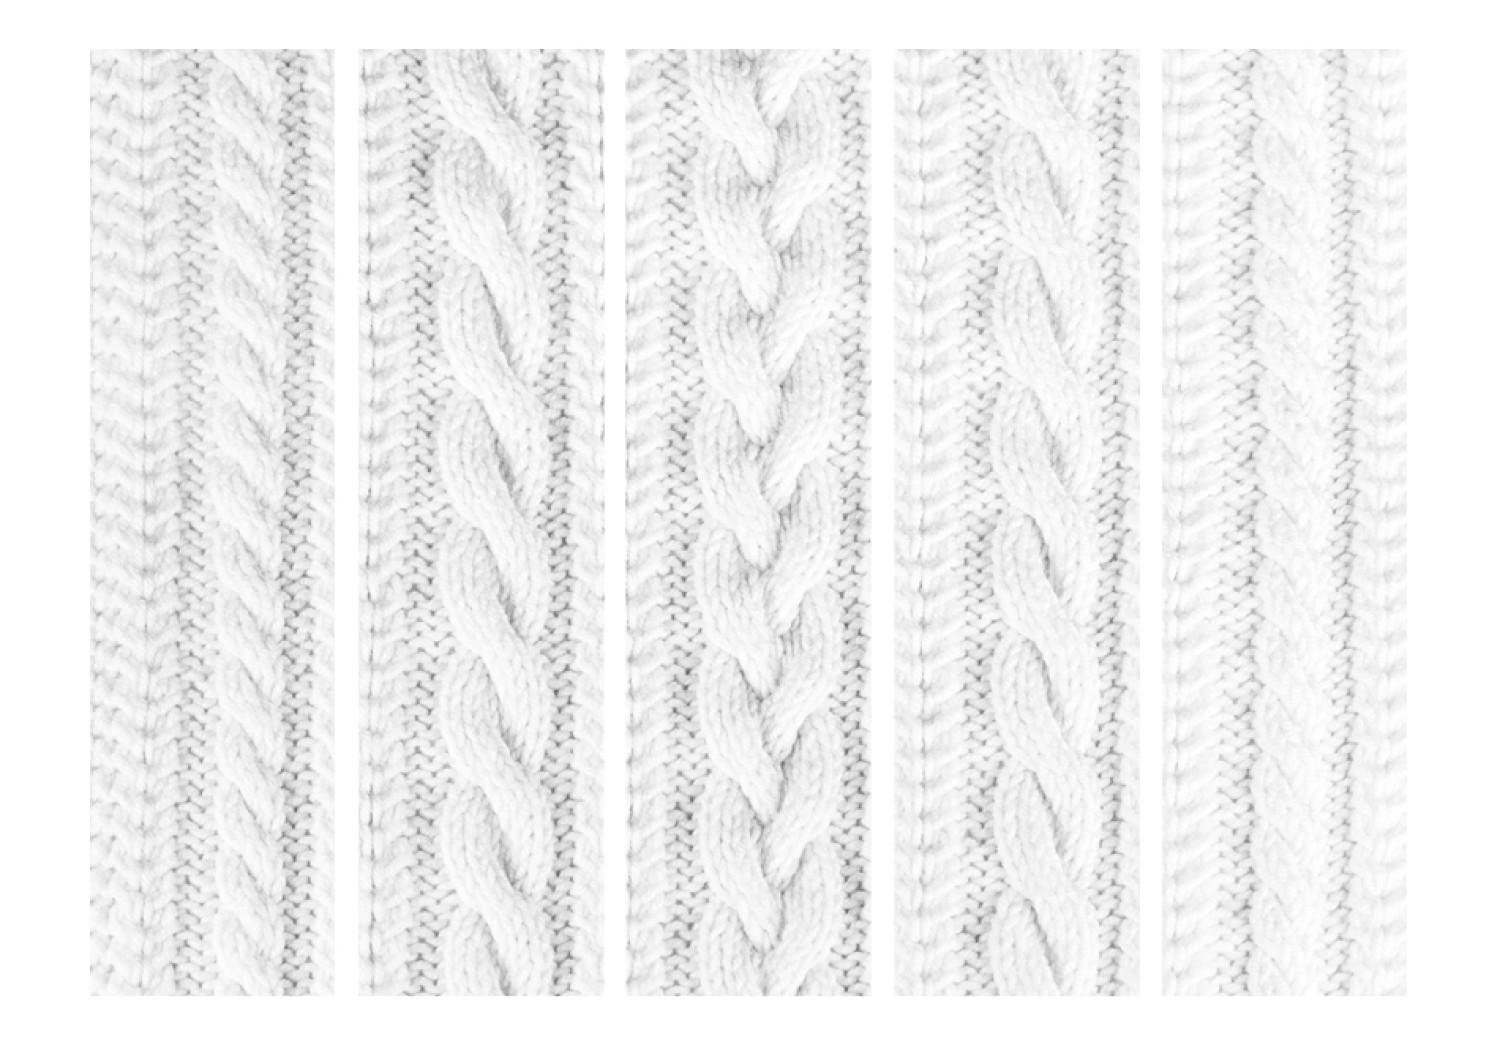 Biombo barato Trenzado blanco II - textura de tela blanca con elementos de trenza